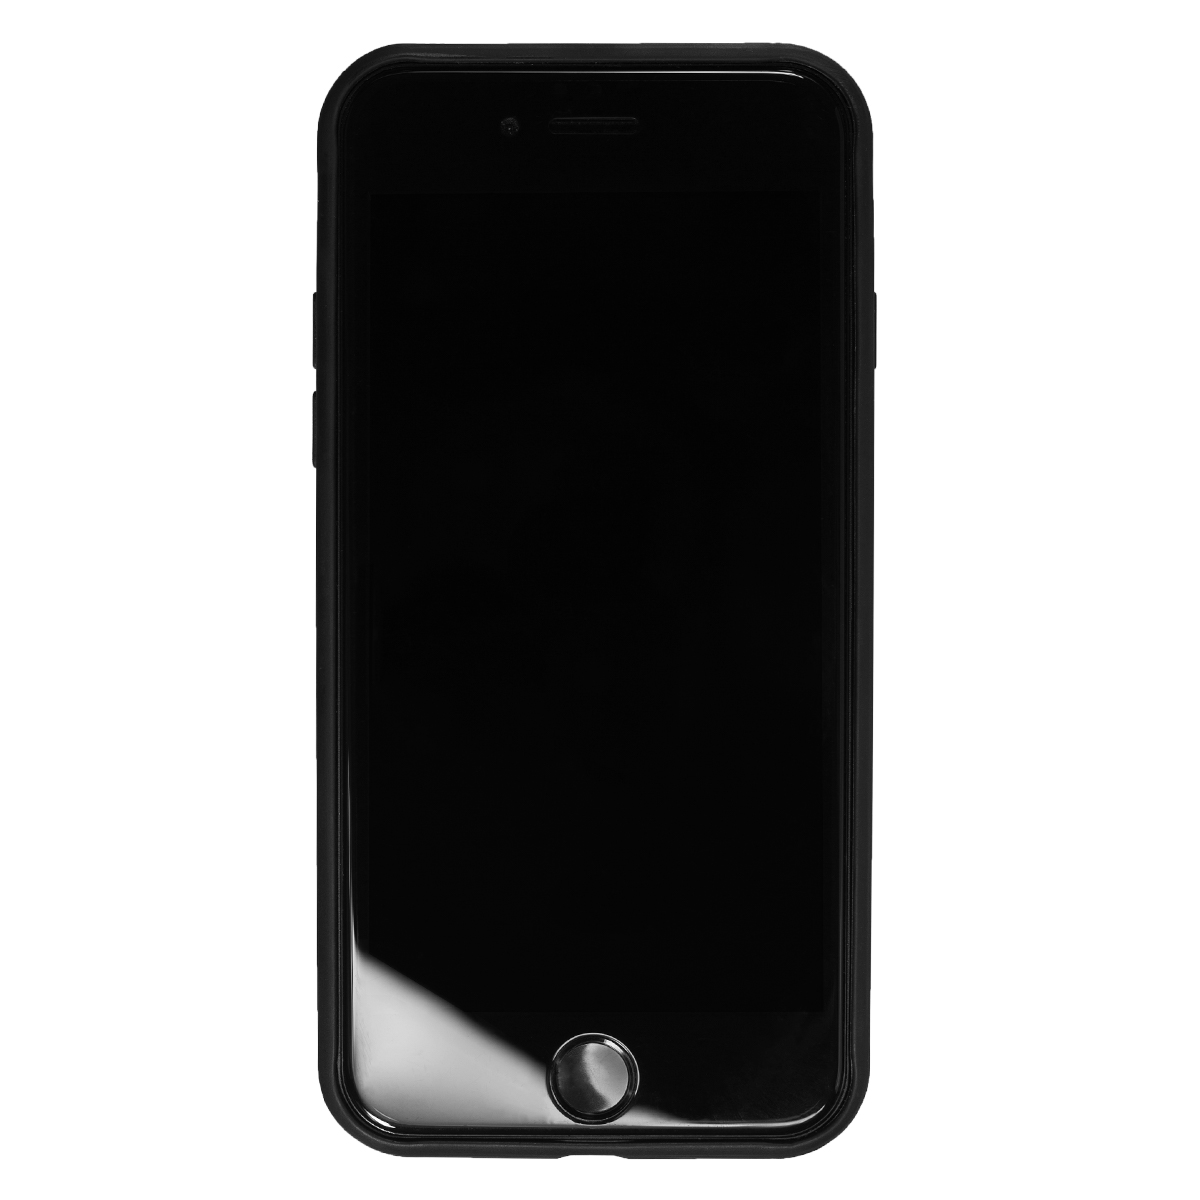 Husa spate sticla iPhone 7 Negru iShield thumb